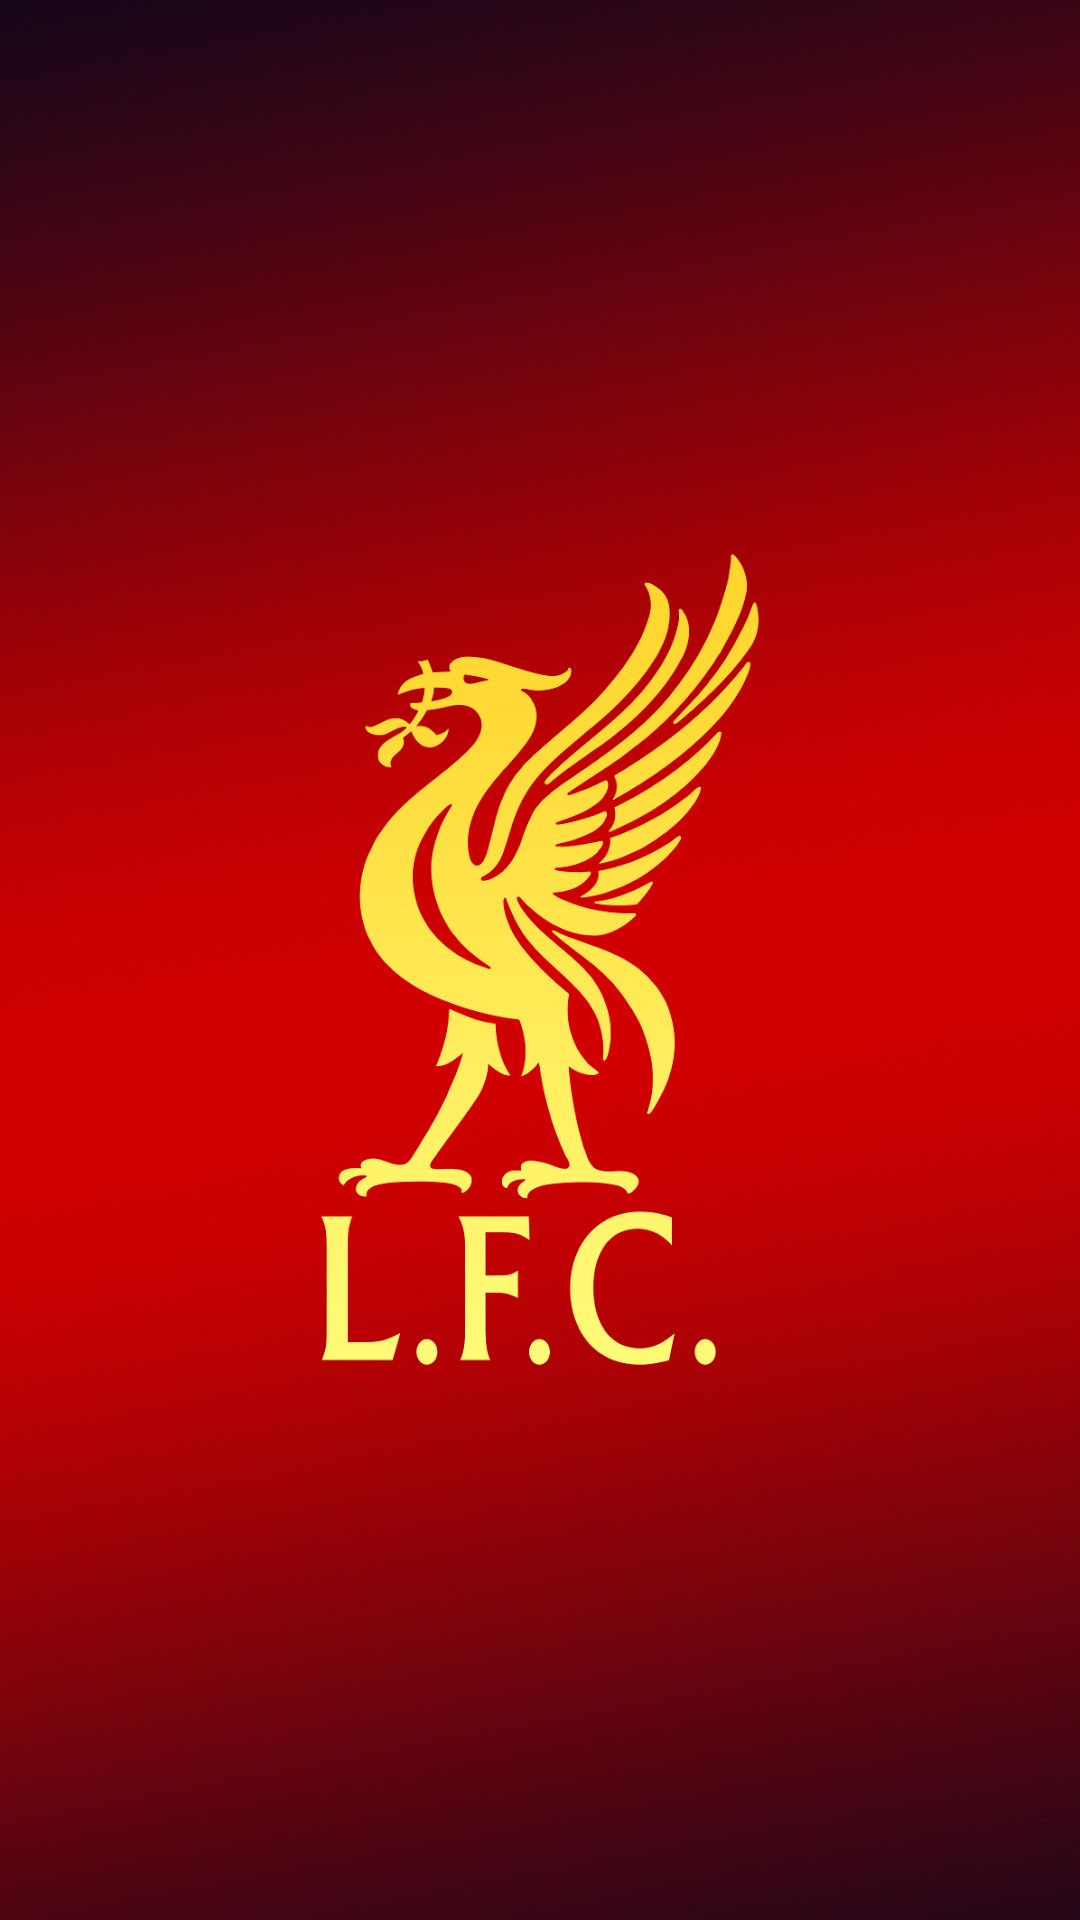 Liverpool s on